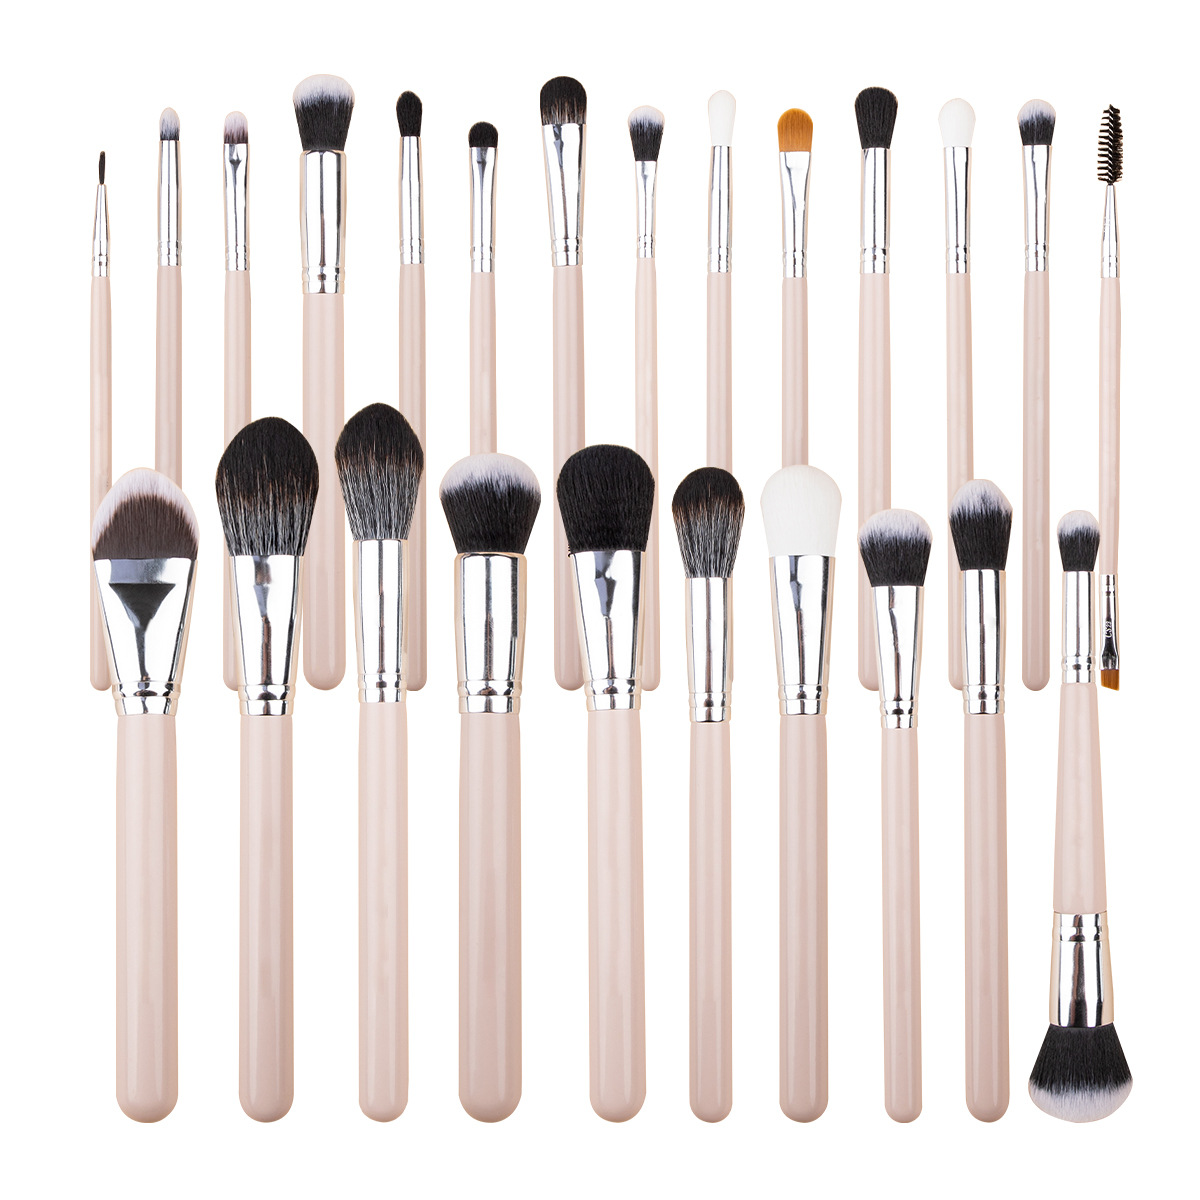 OEM 24pcs Professional Makeup Brush Set Premium Synthetic Foundation Loose Powder Concealer Eyeshadow Make up Brushes